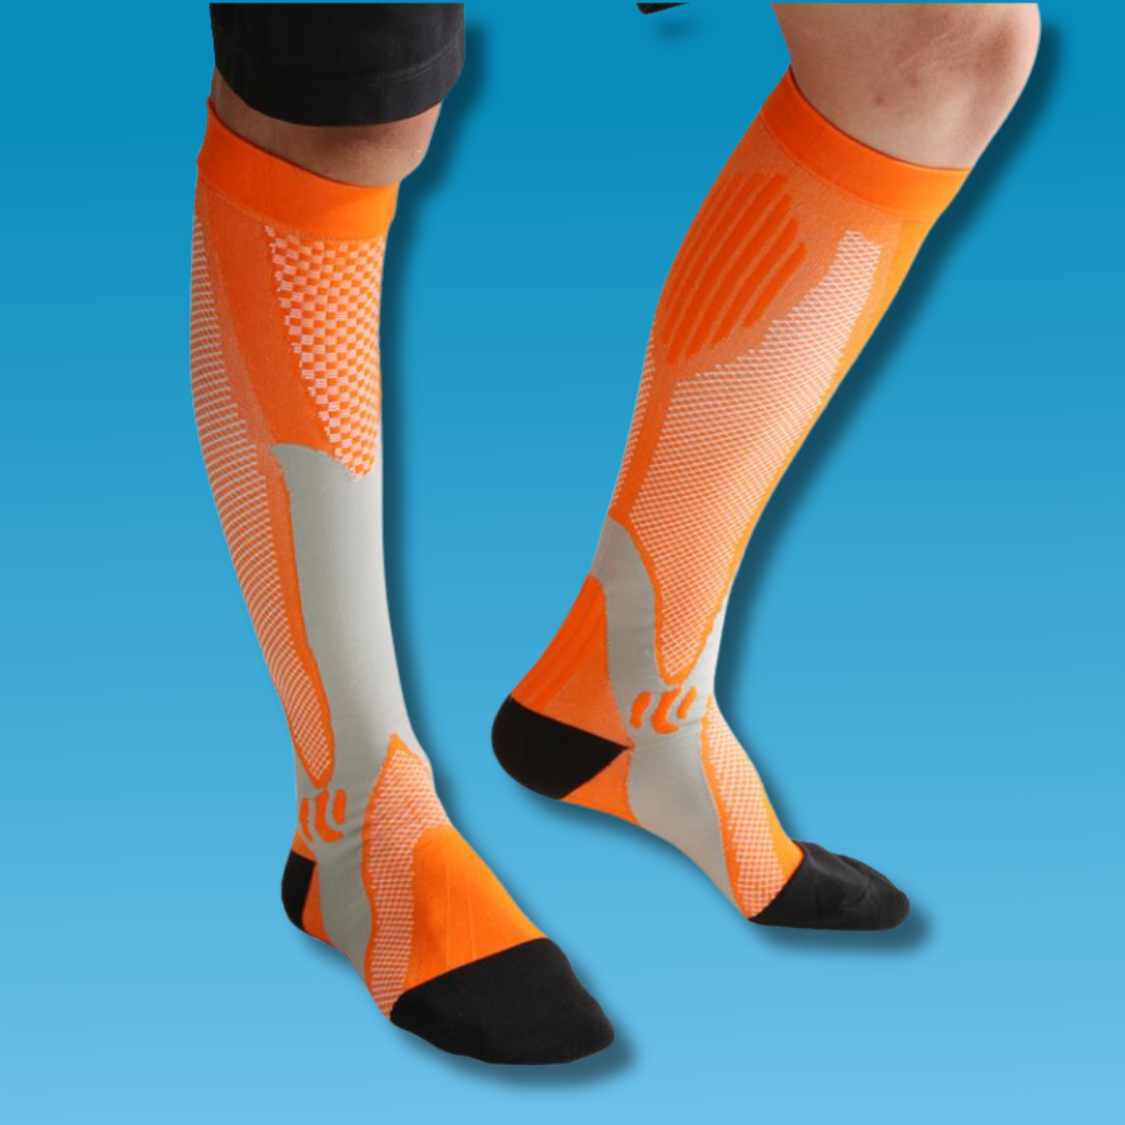 Advanced Compression Socks | Buy 1 Get 1 Free Deal